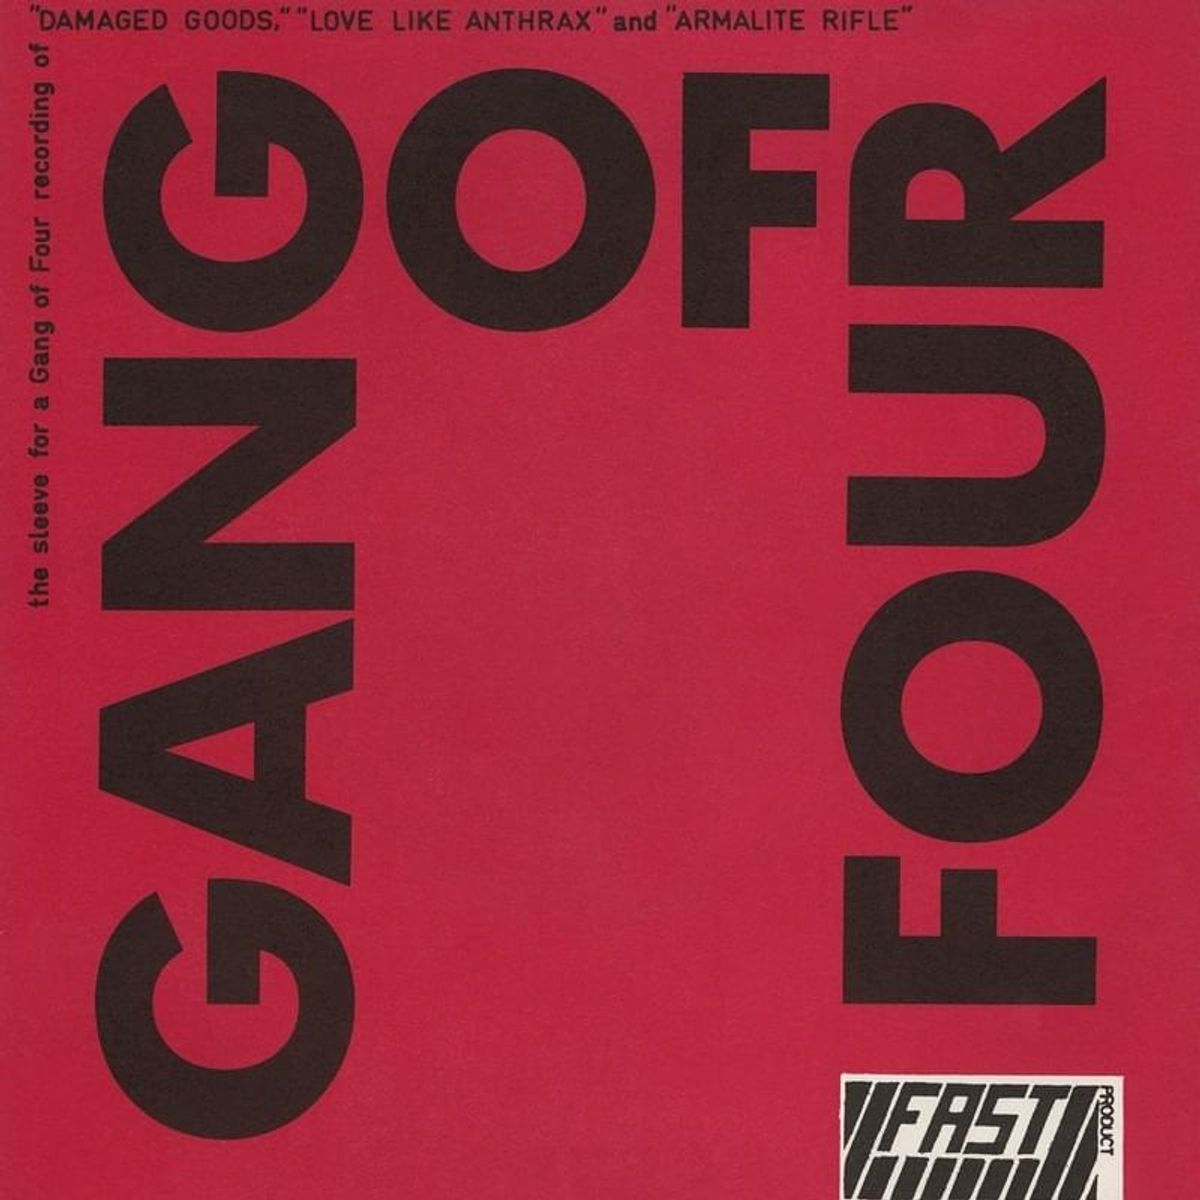 #1979 - Gang Of Four - Damaged Goods